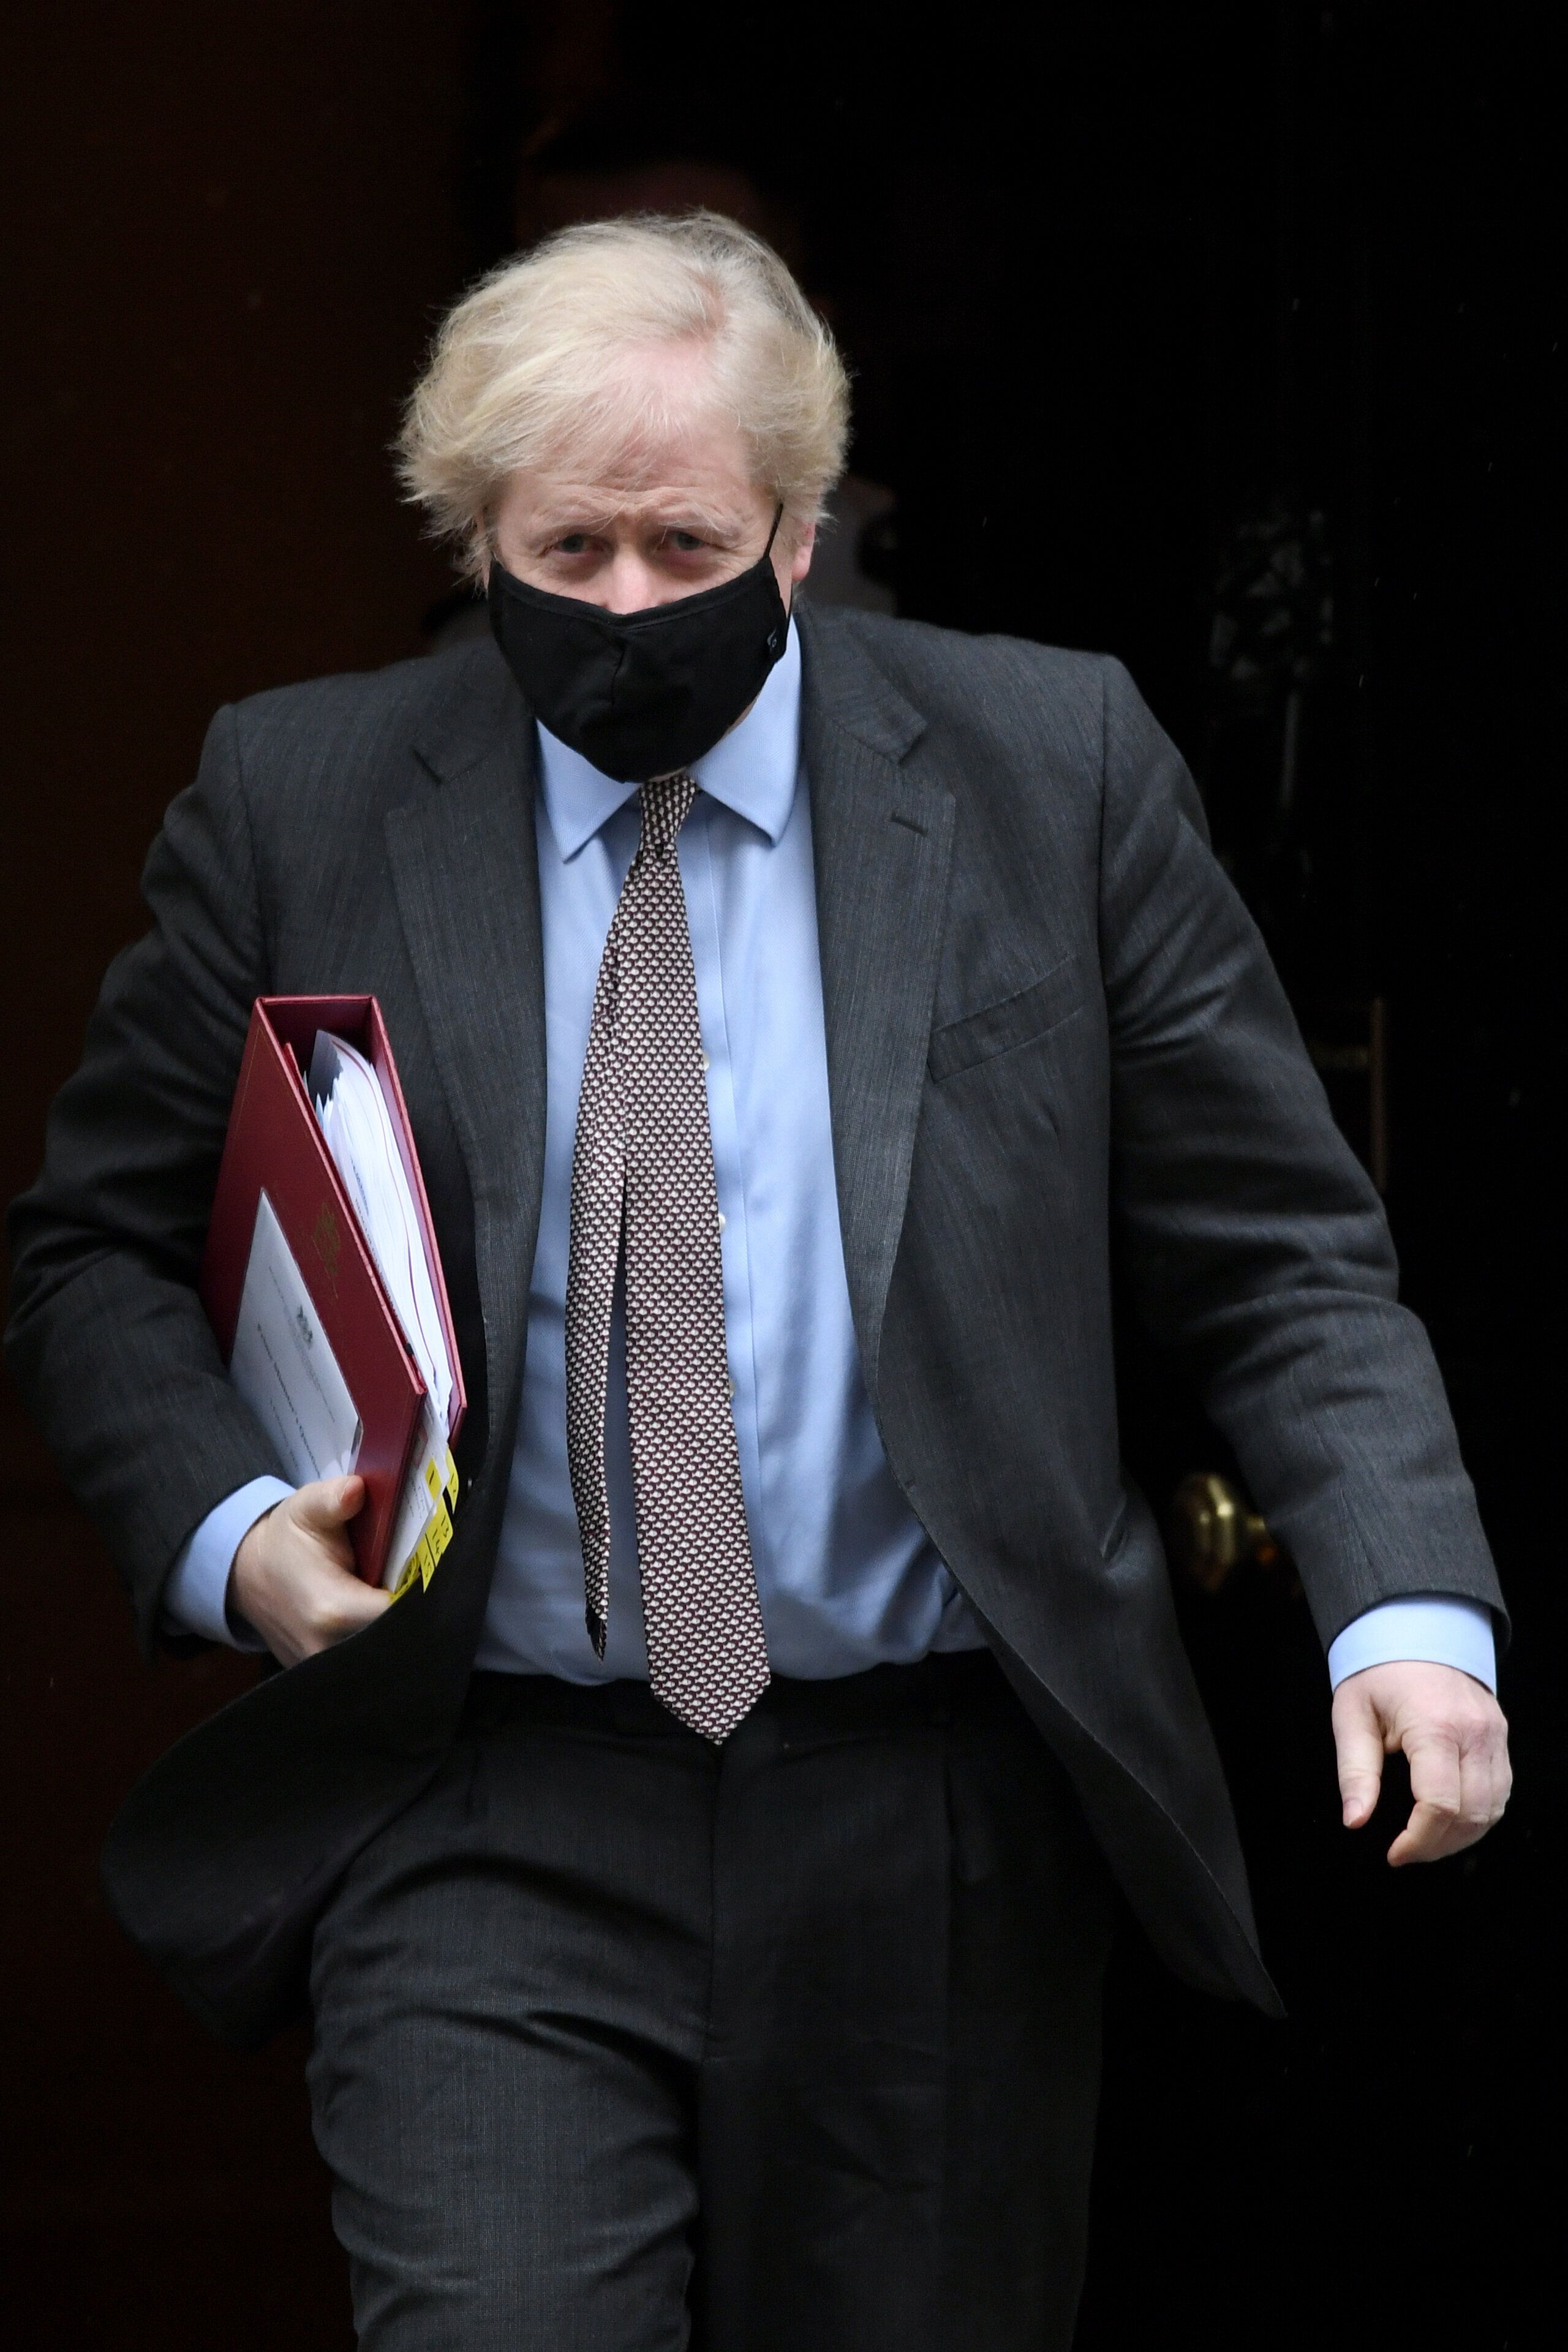 Prime minister Boris Johnson leaves 10 Downing